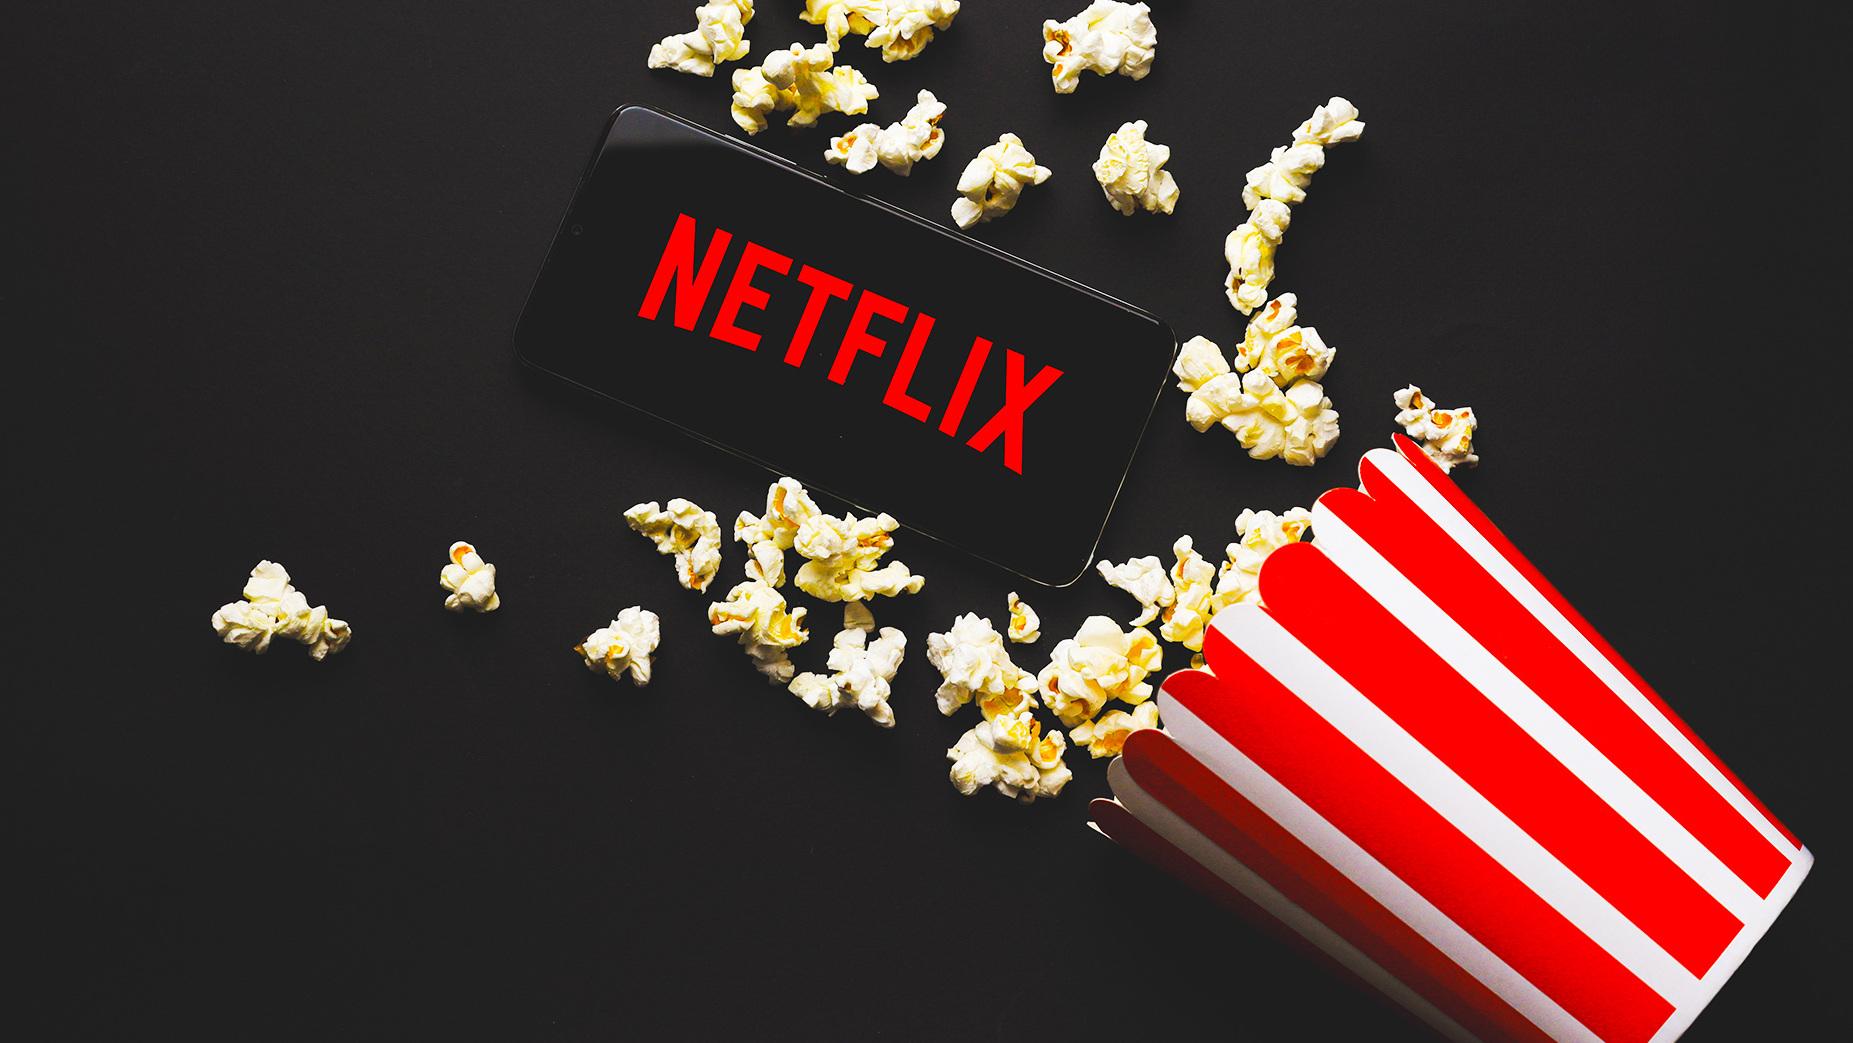 Netflix Stock Analysis Is Netflix Stock Worth Investing In?